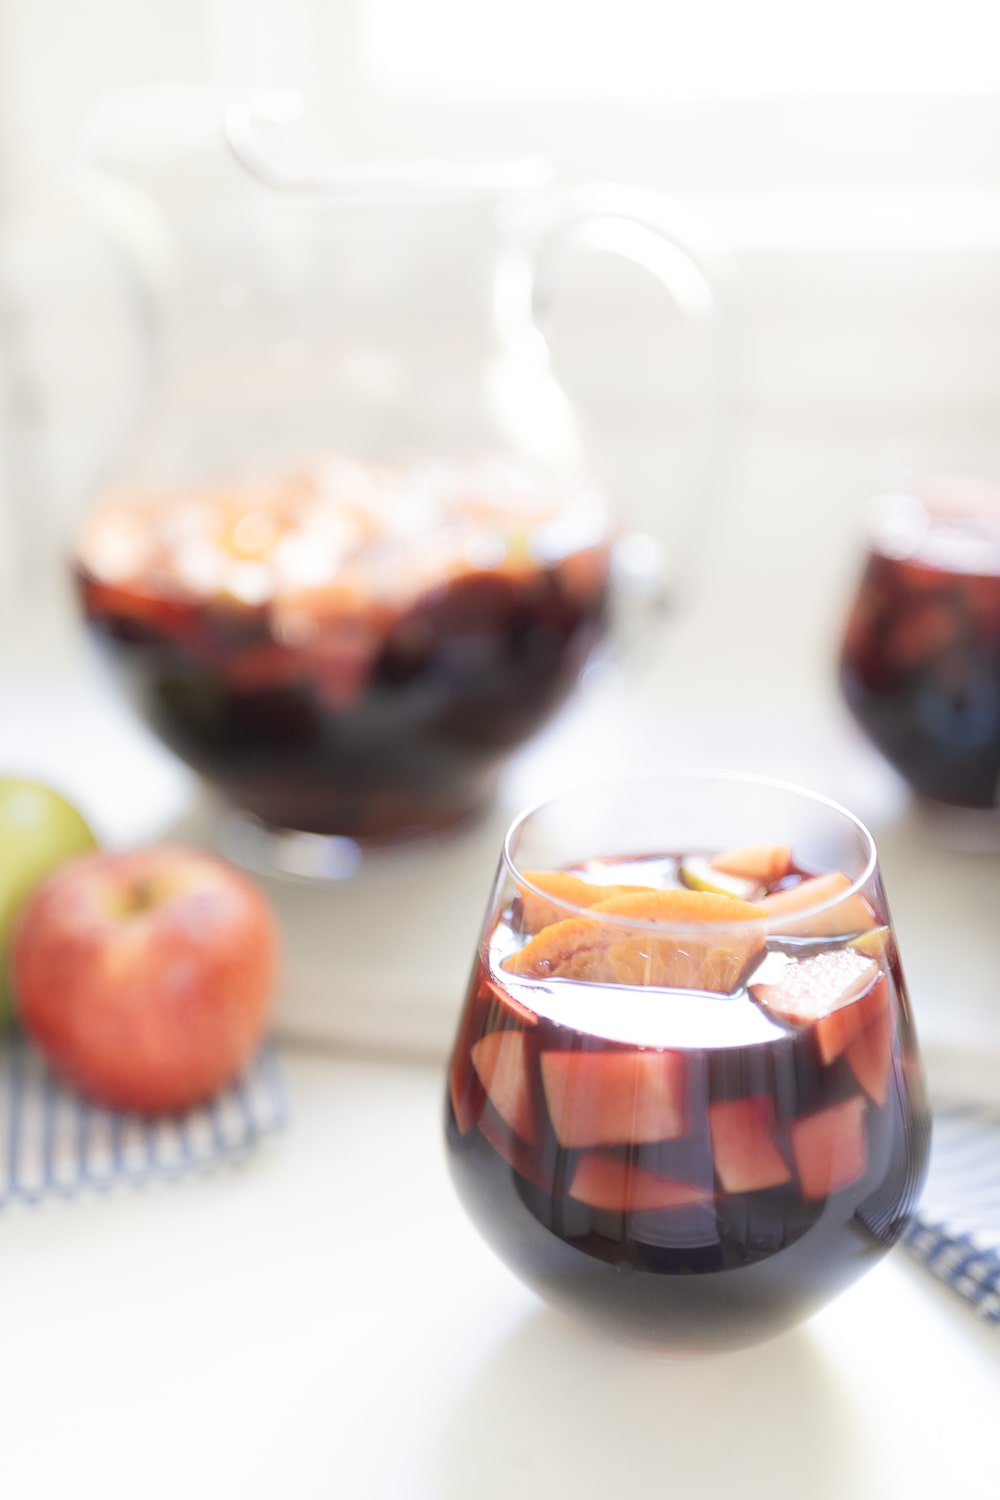 Apple cinnamon fall red sangria recipe by blogger Stephanie Ziajka on Diary of a Debutante